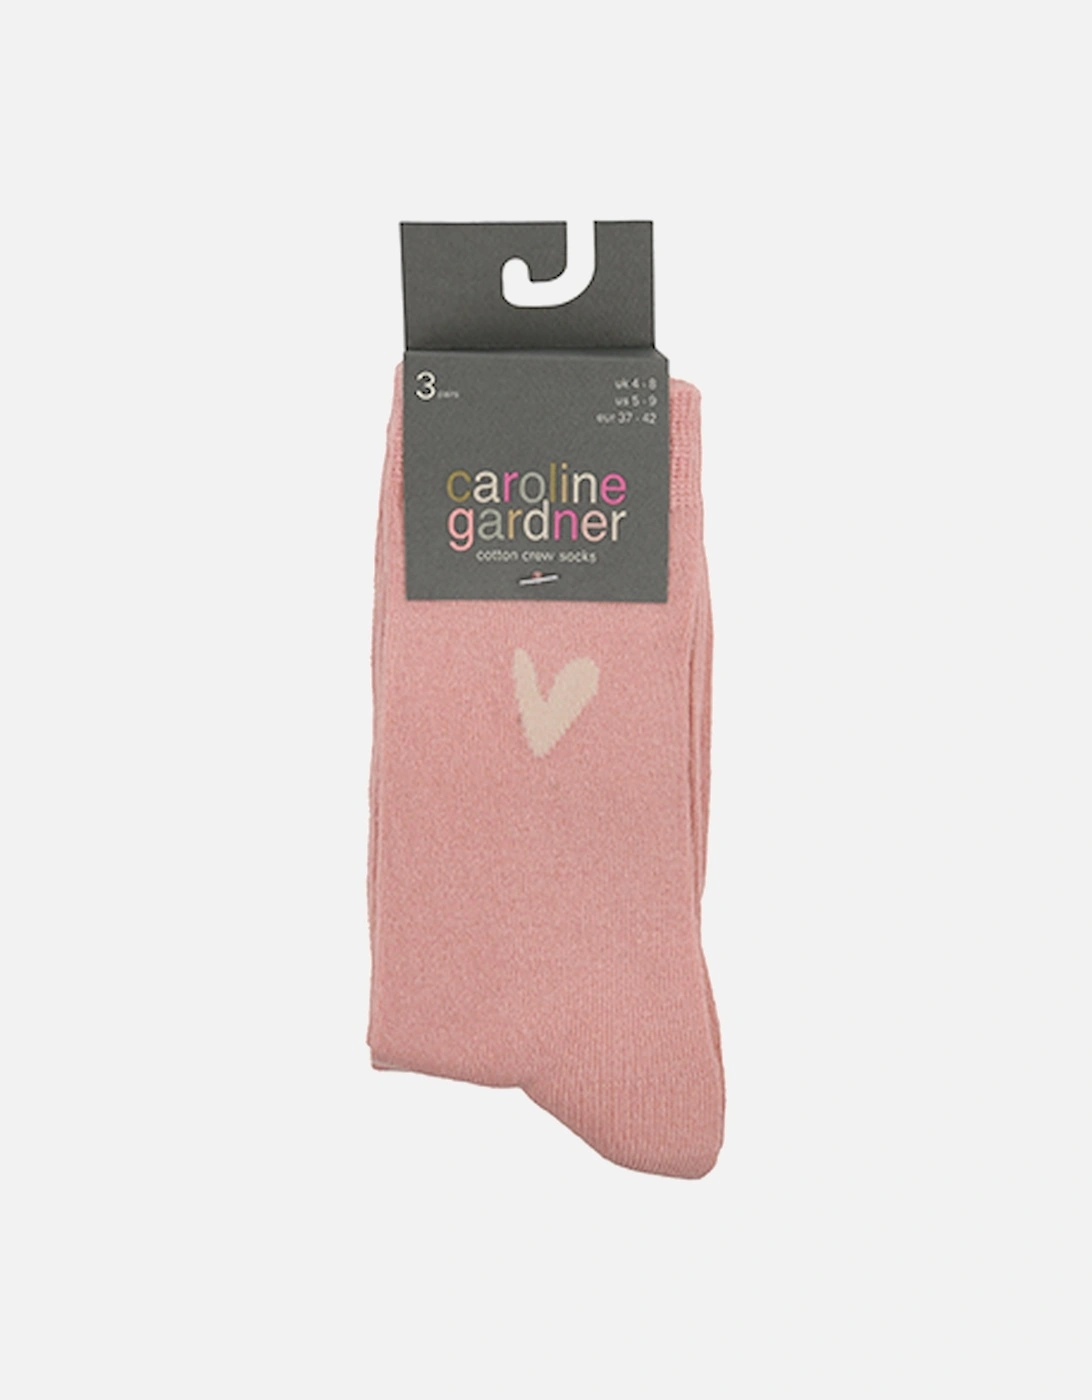 Plain Pink Socks 3 Pack Ivory/Orange/Cha Heart